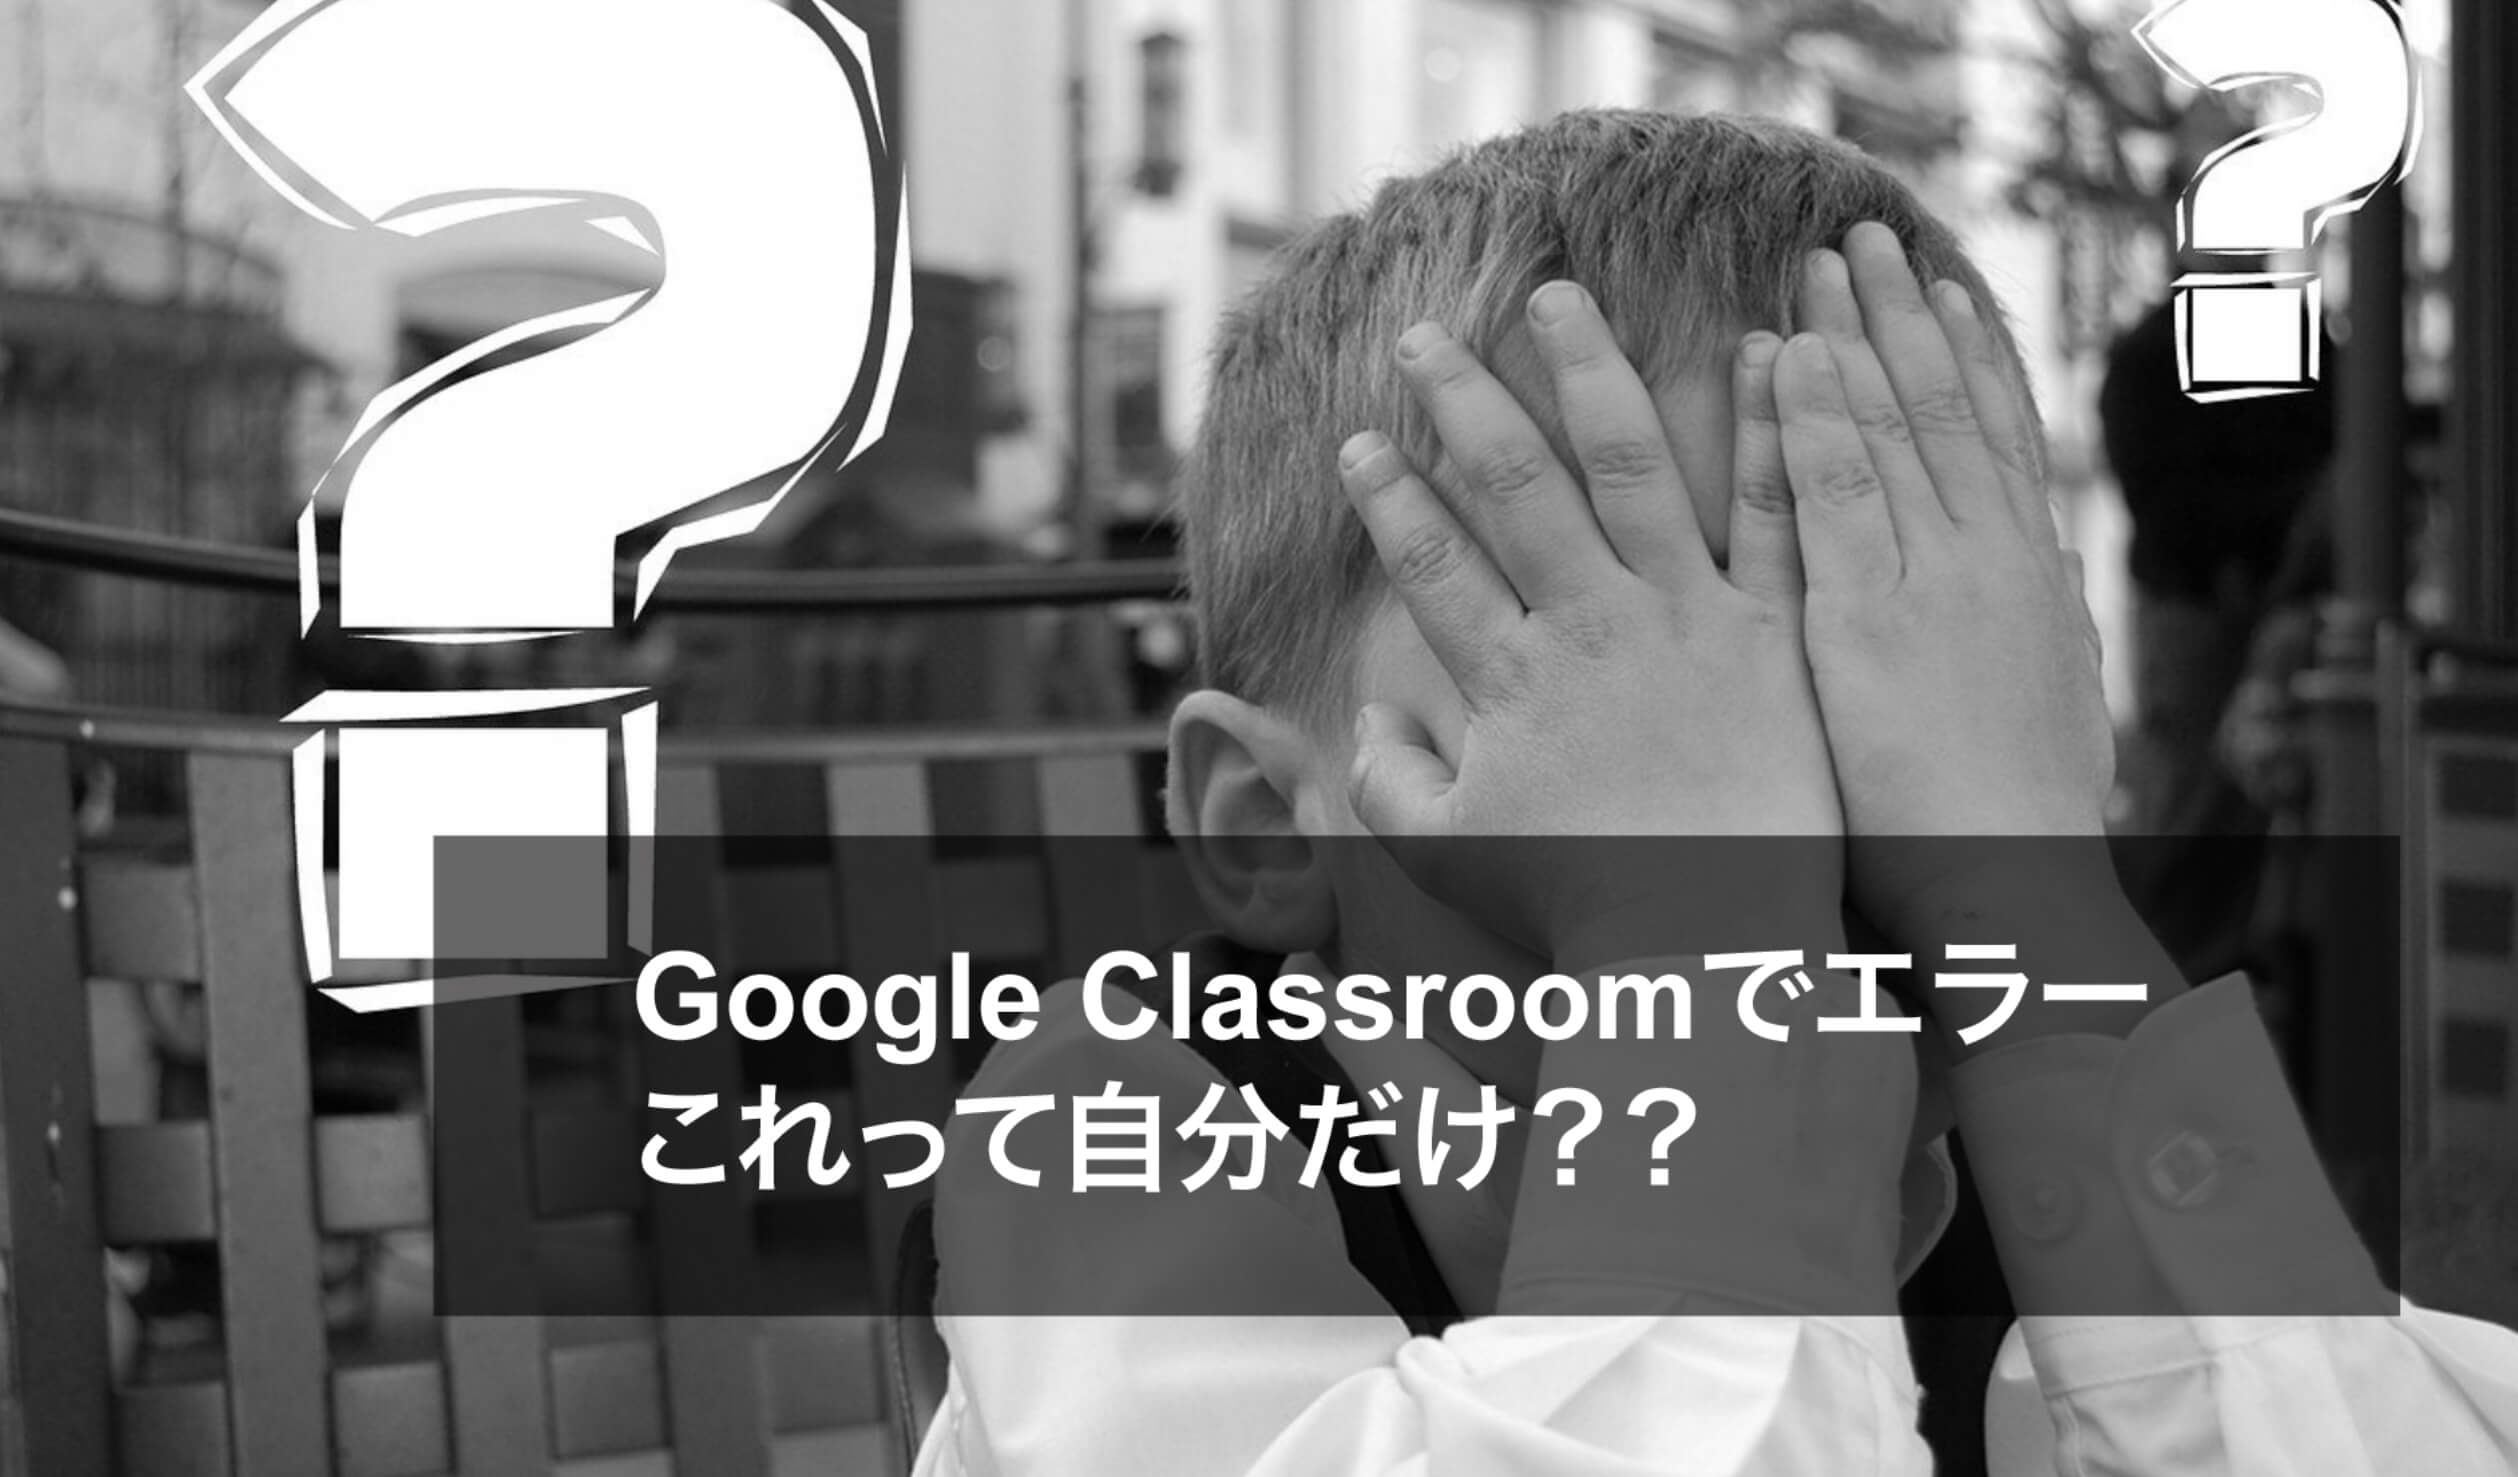 Google classroomでエラー発生